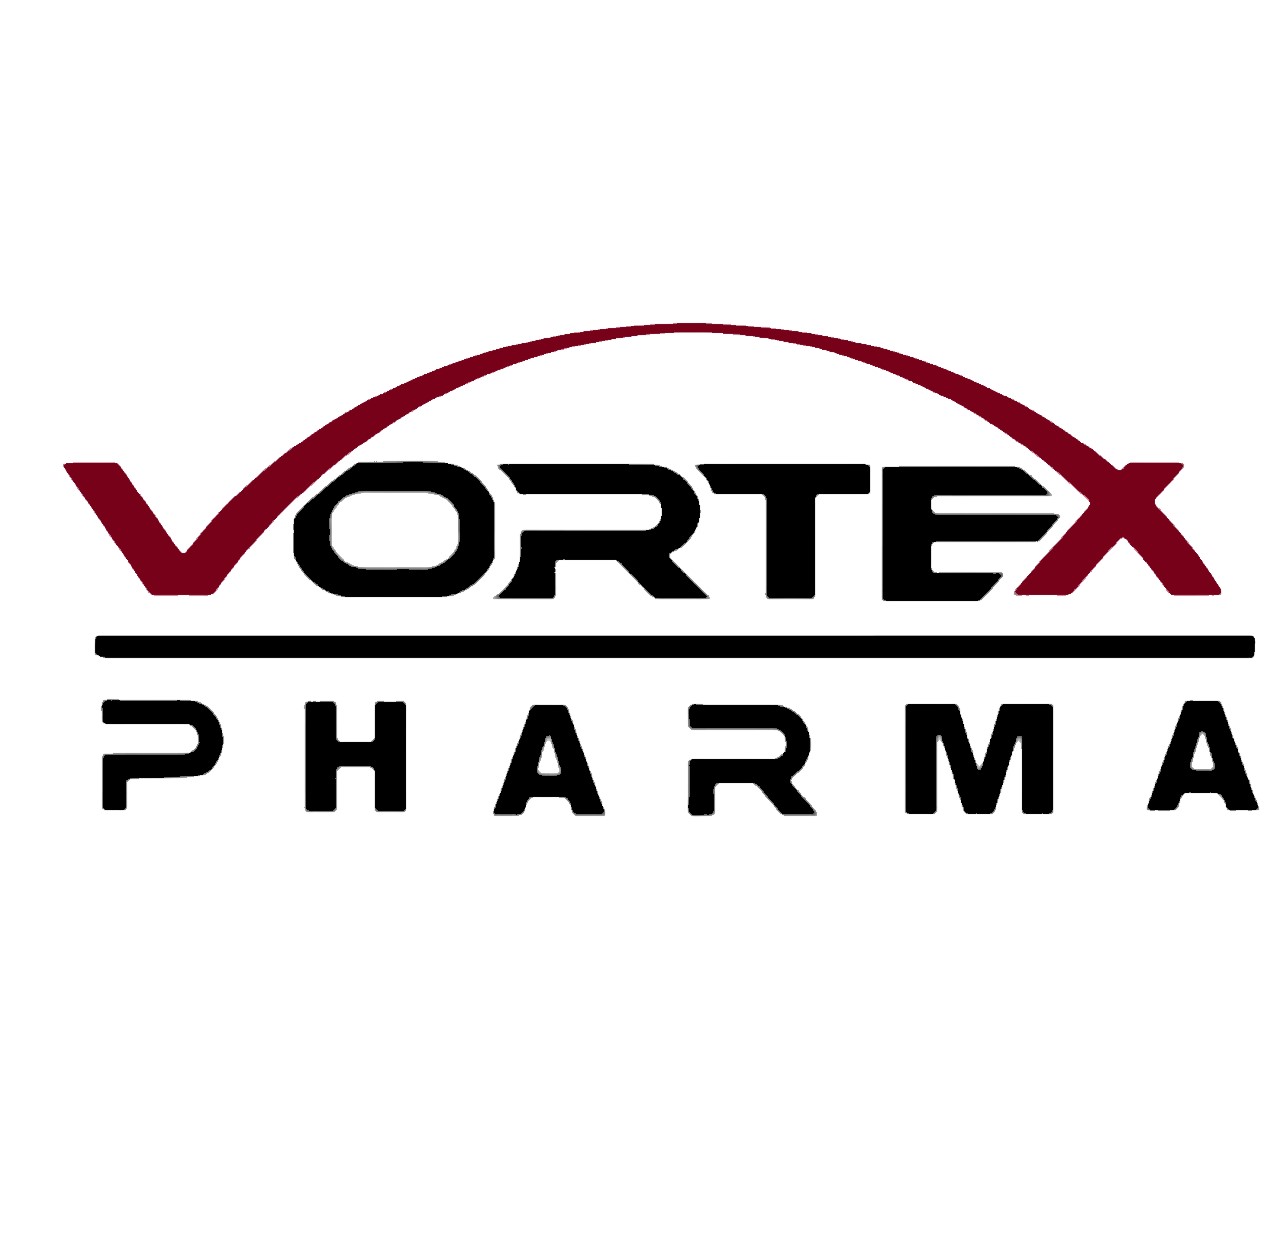 Vortex pharm